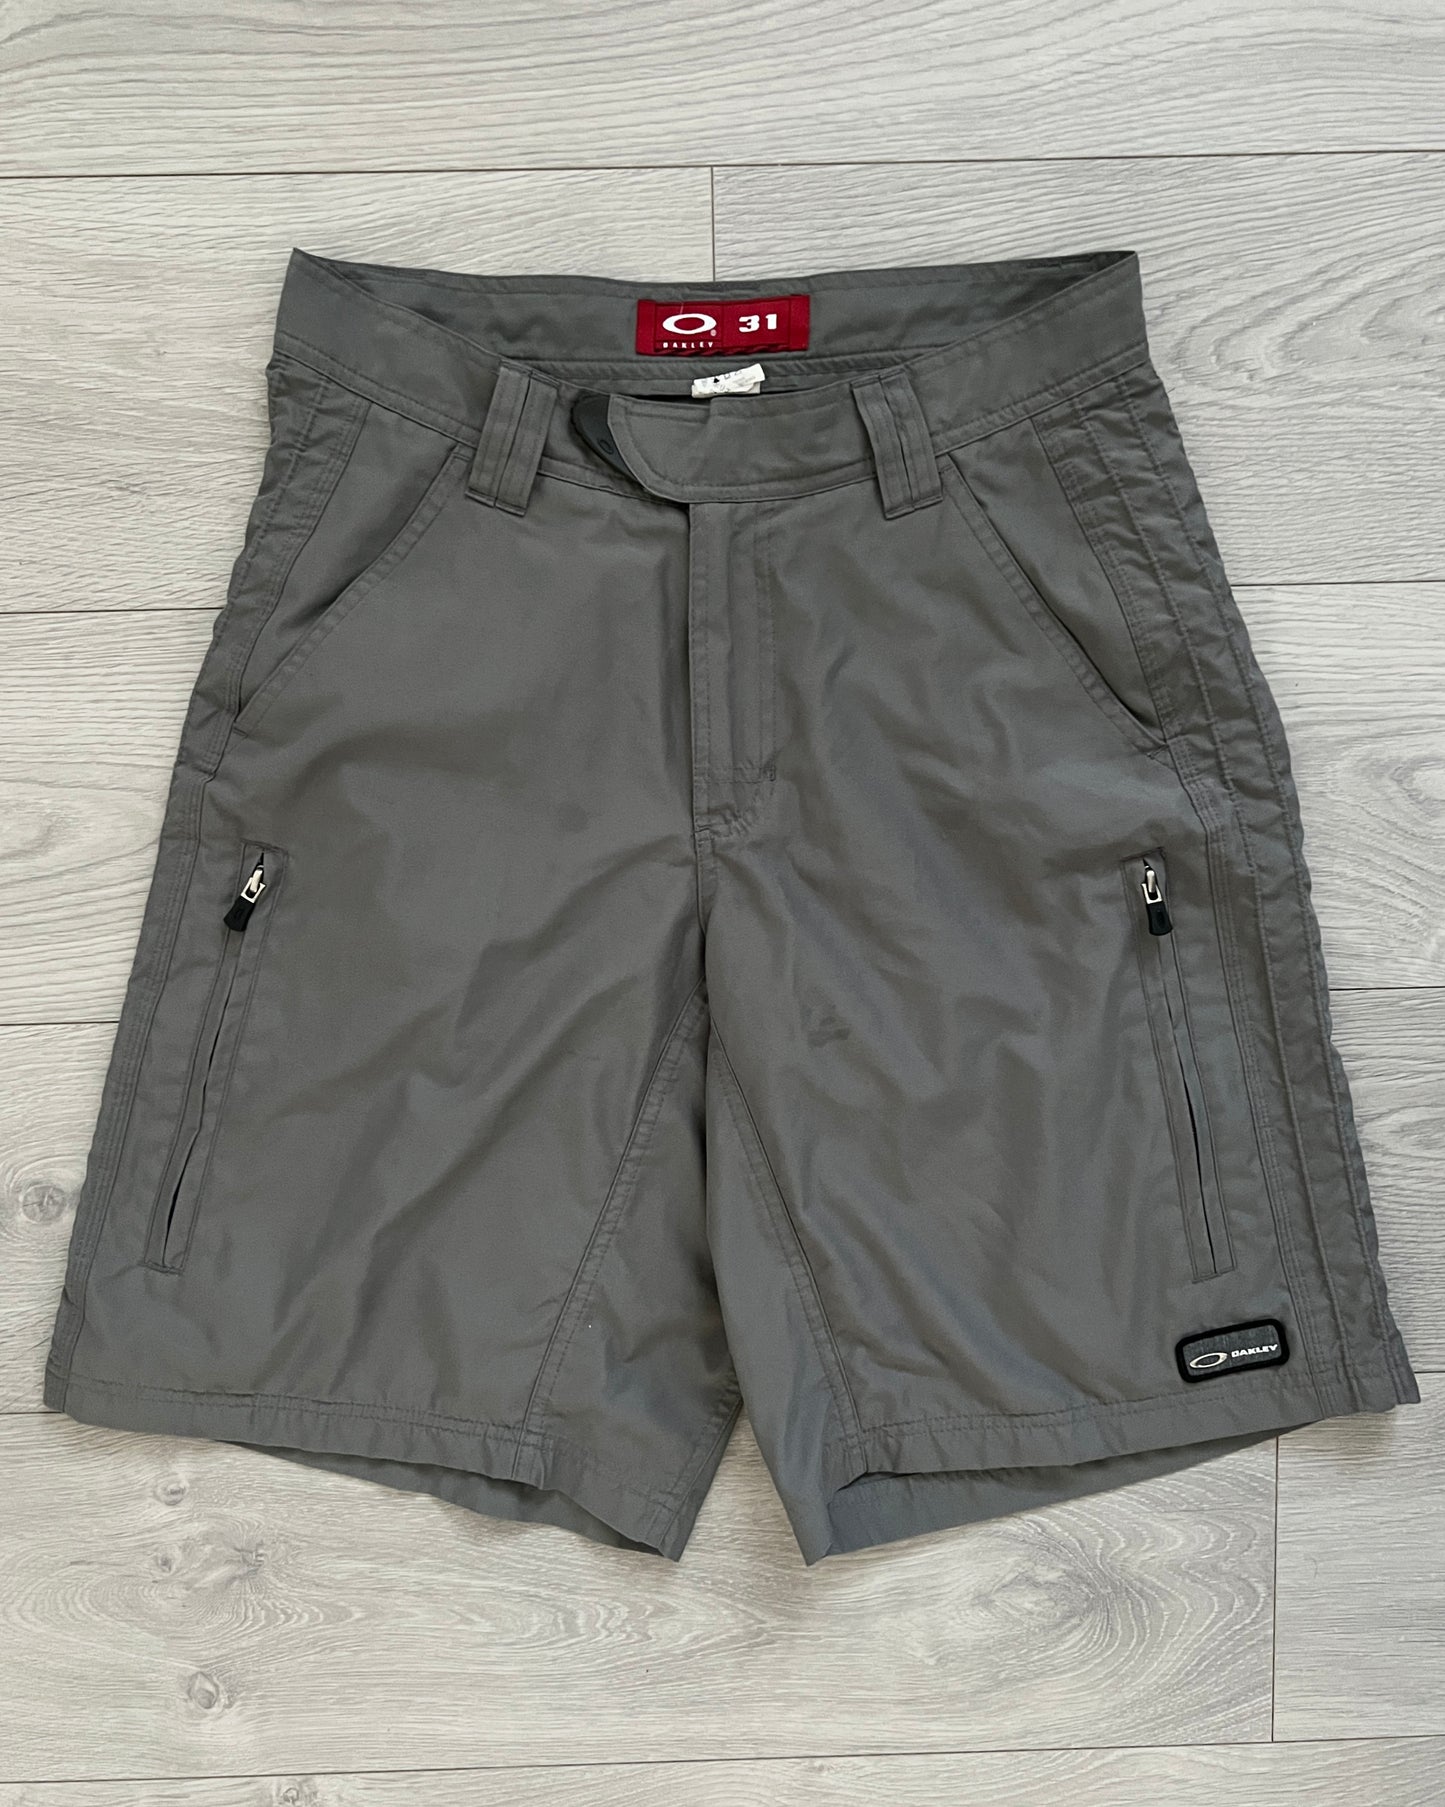 Oakley 00s Technical Multi-Pocket Shorts - Size 31